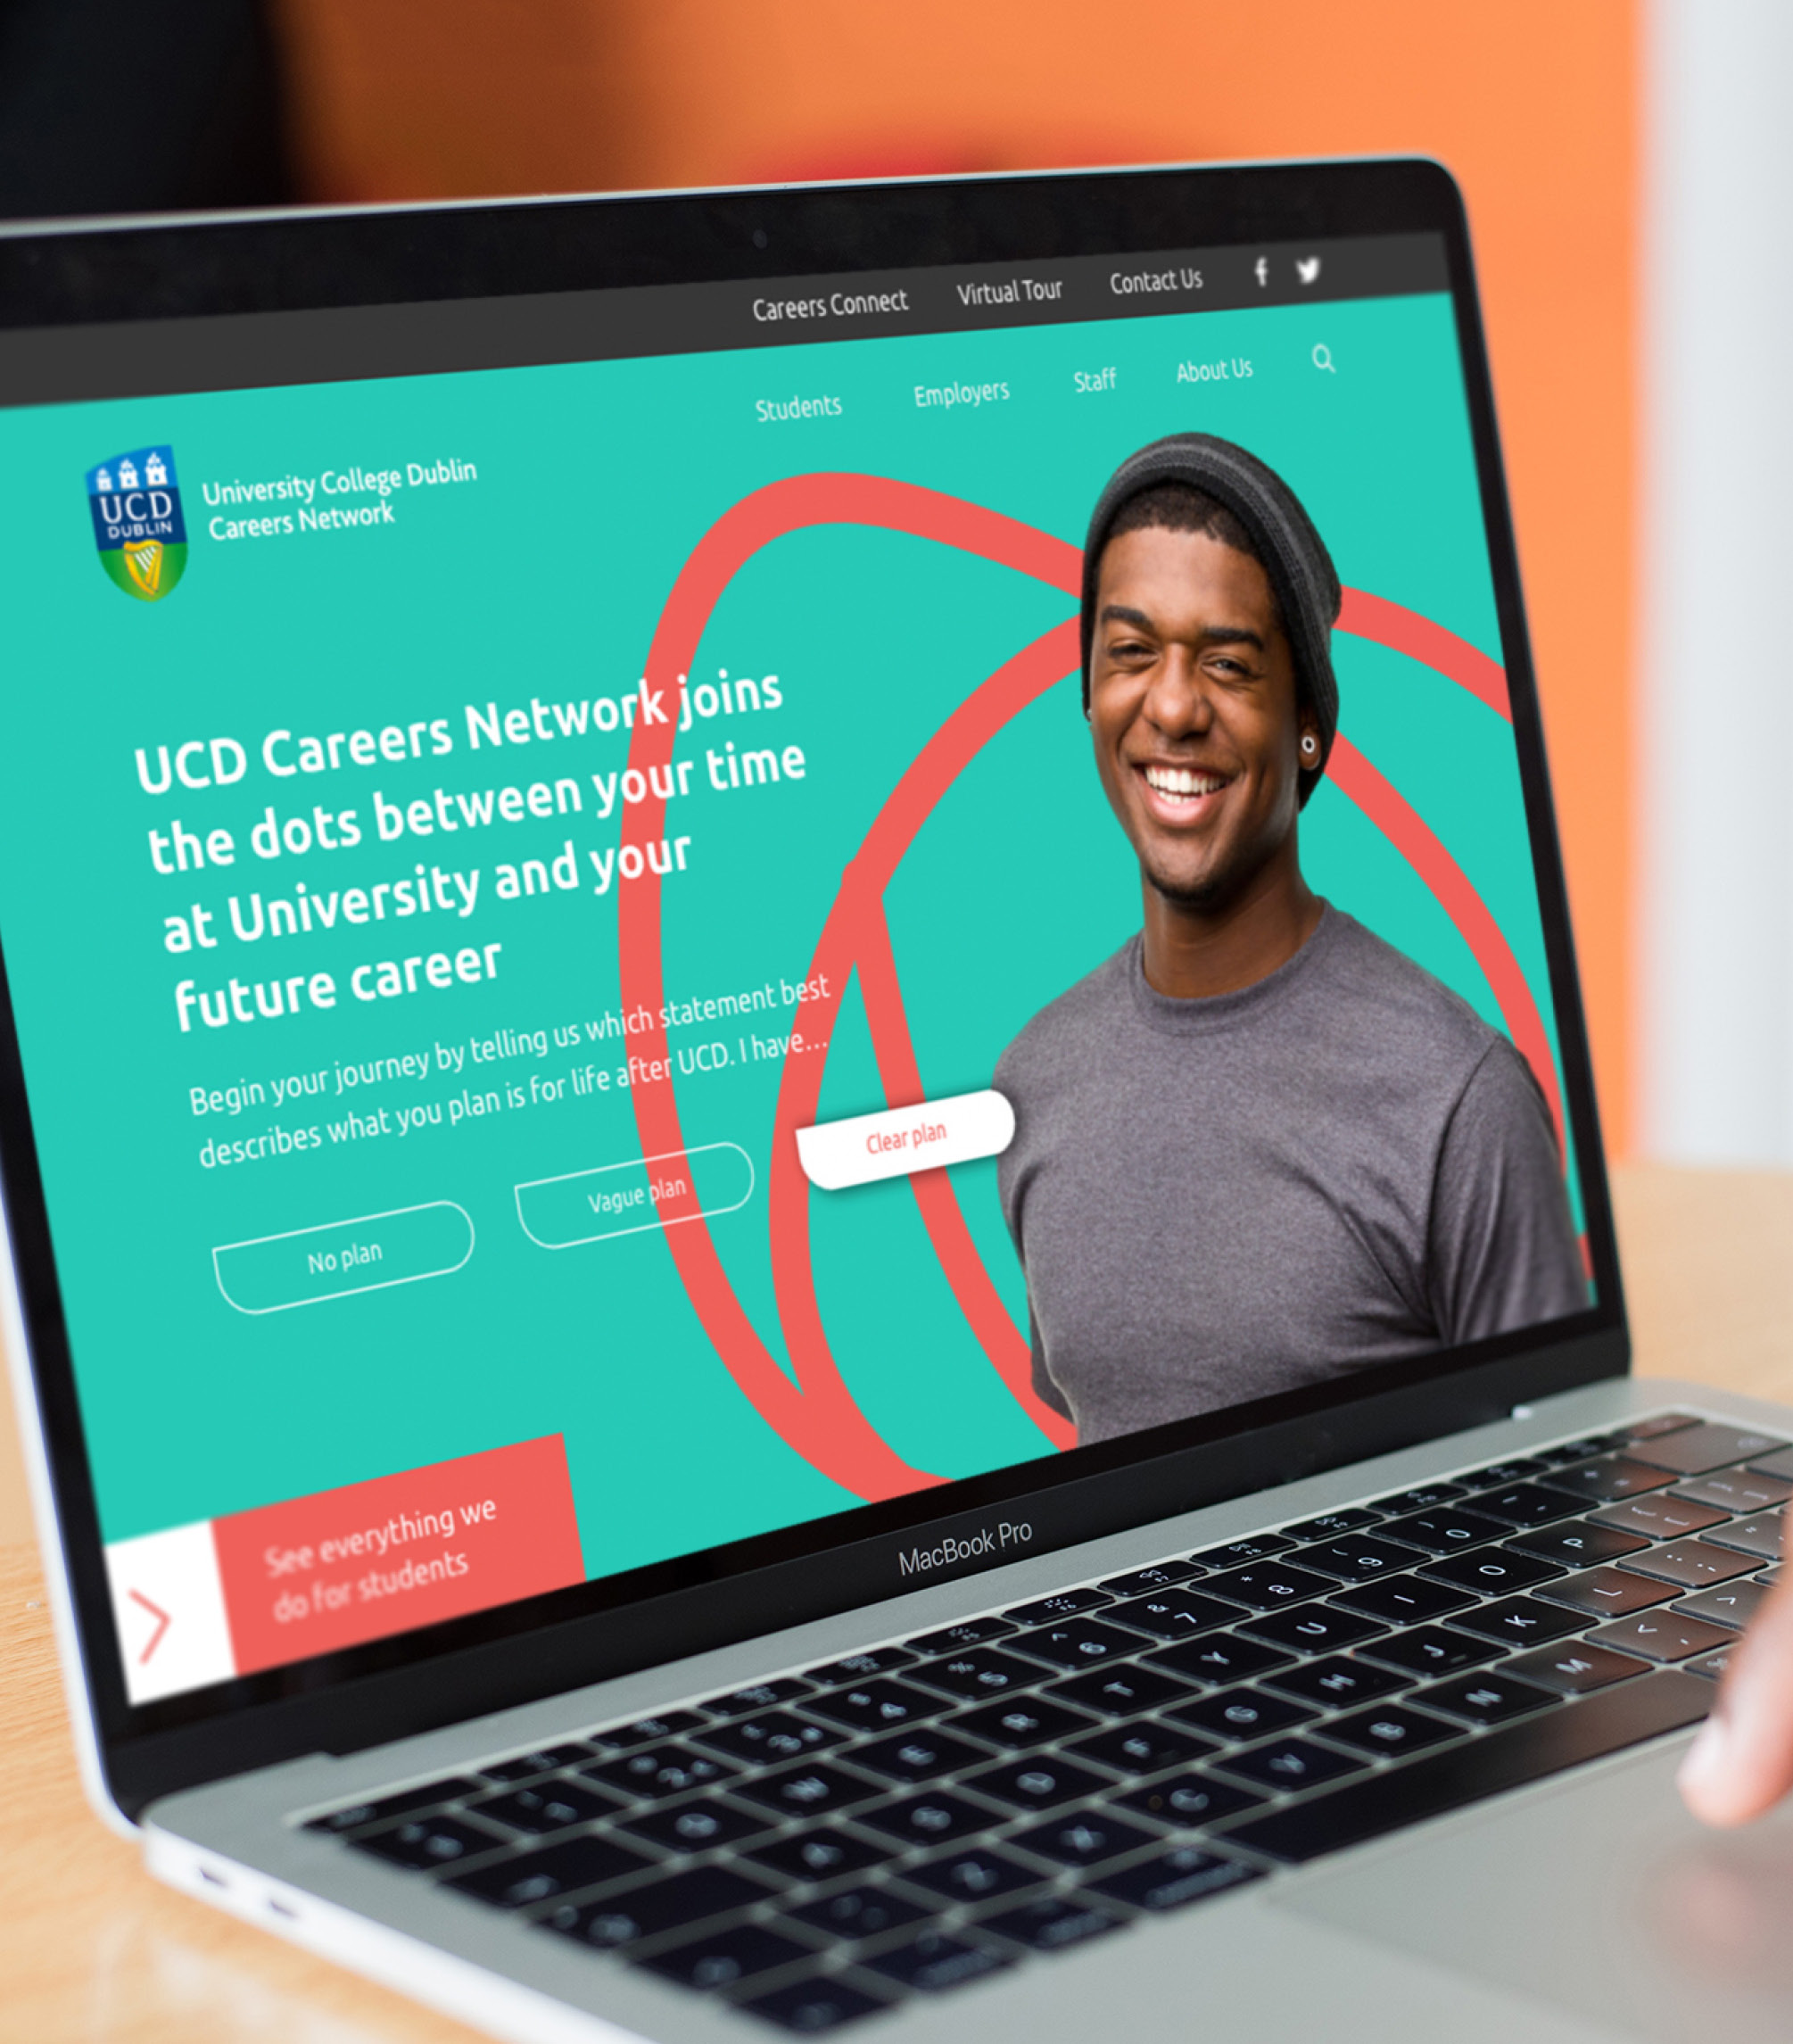 University College Dublin Careers Network website